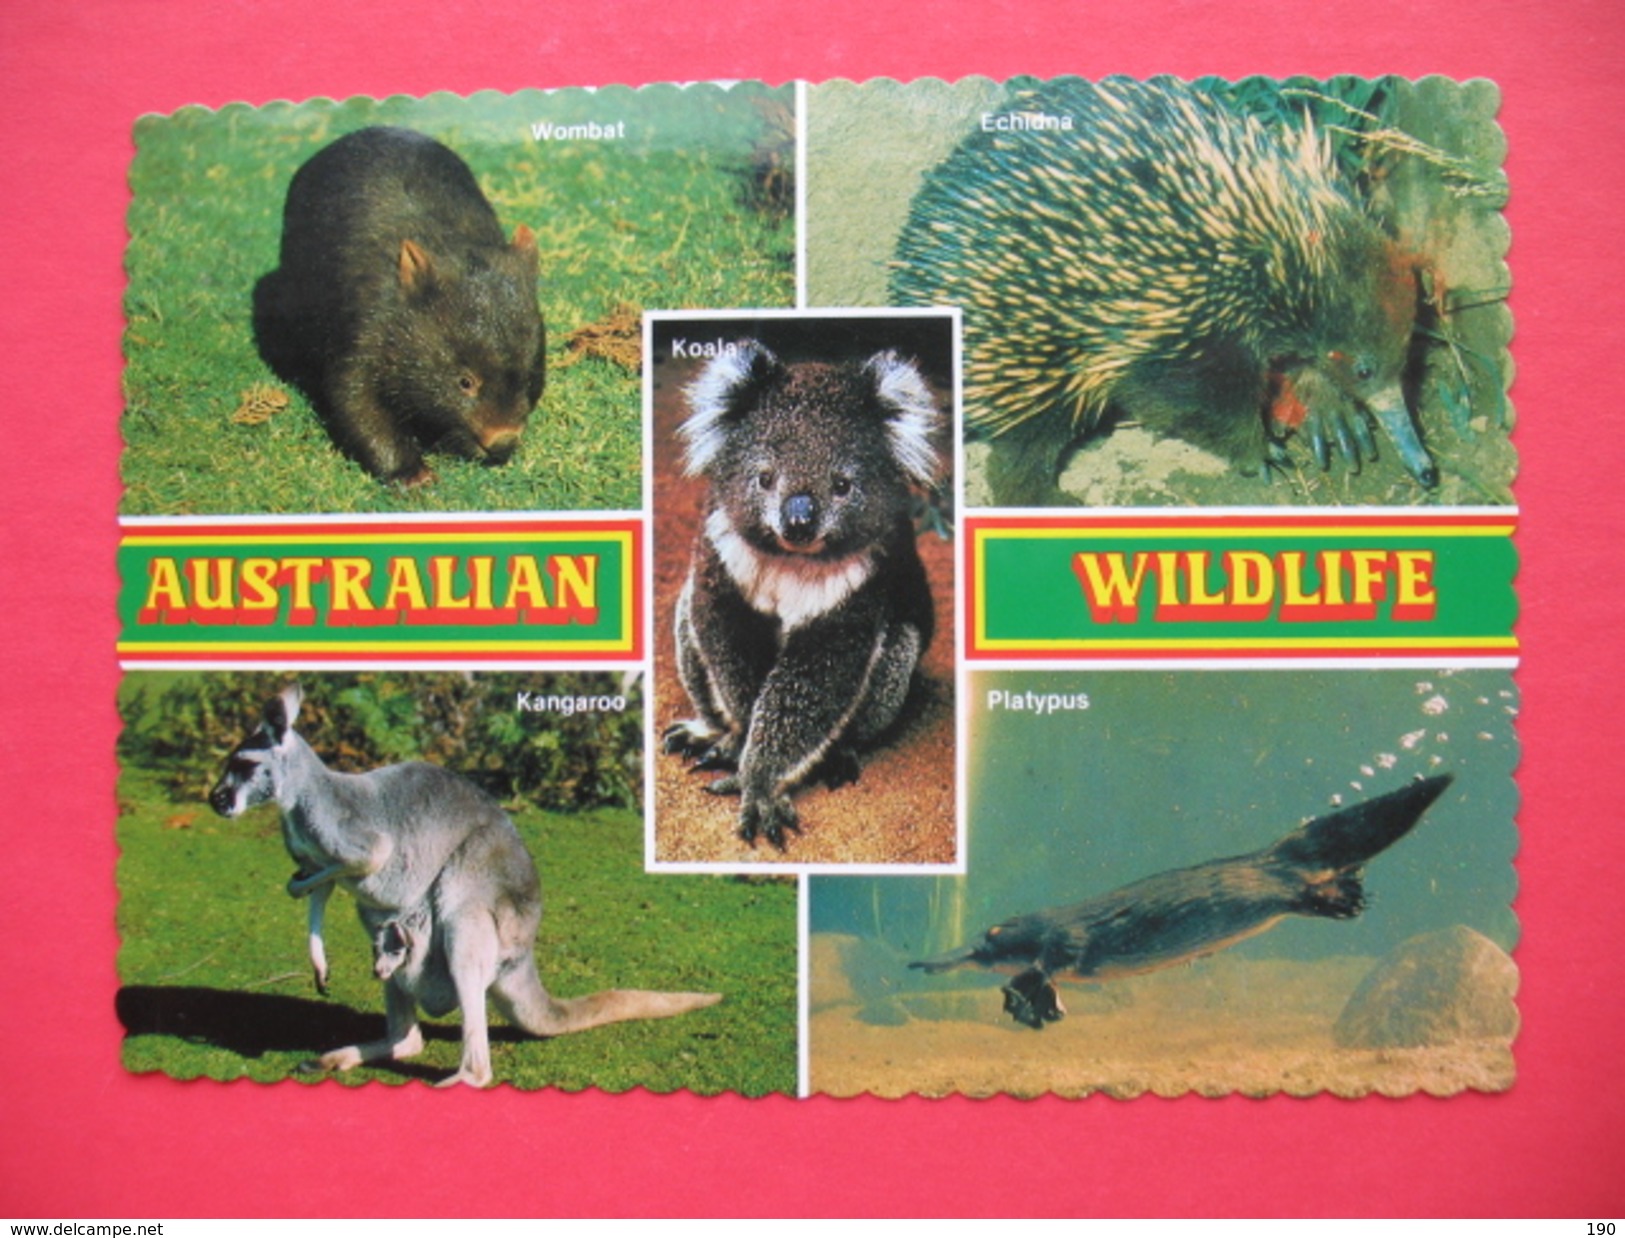 AUSTRALIAN WILDLIFE:Koala,Wombat,Kangaroo,Echidna,Platypus - Outback